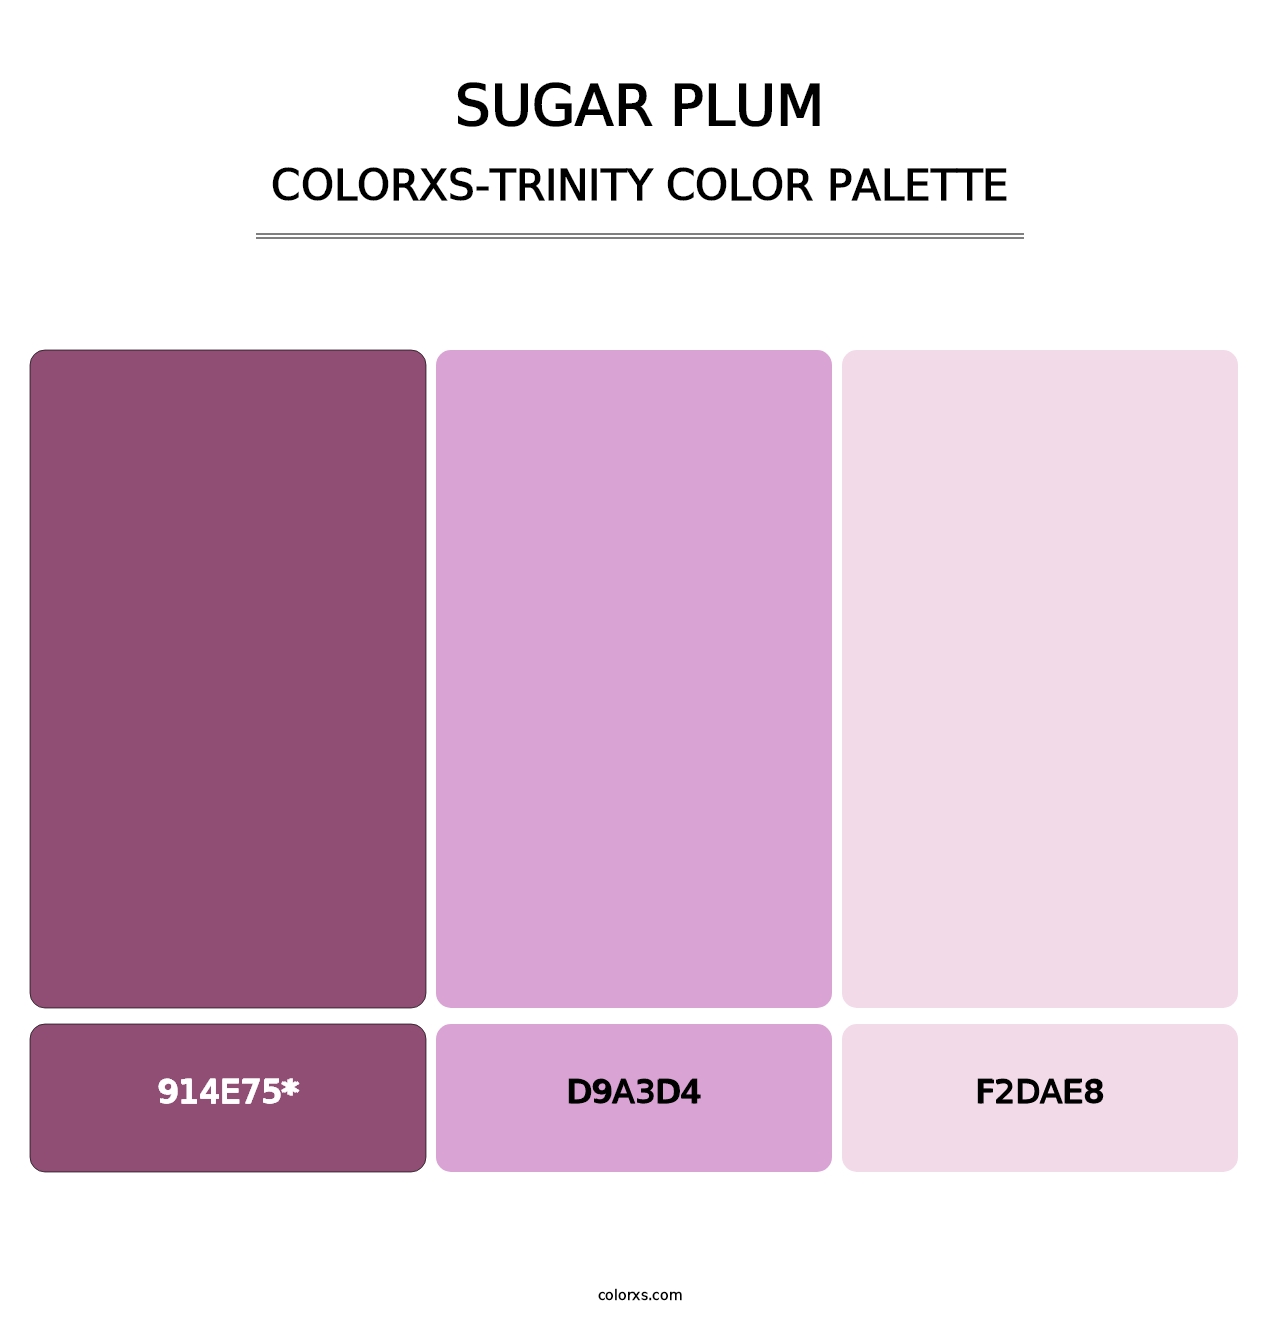 Sugar Plum - Colorxs Trinity Palette